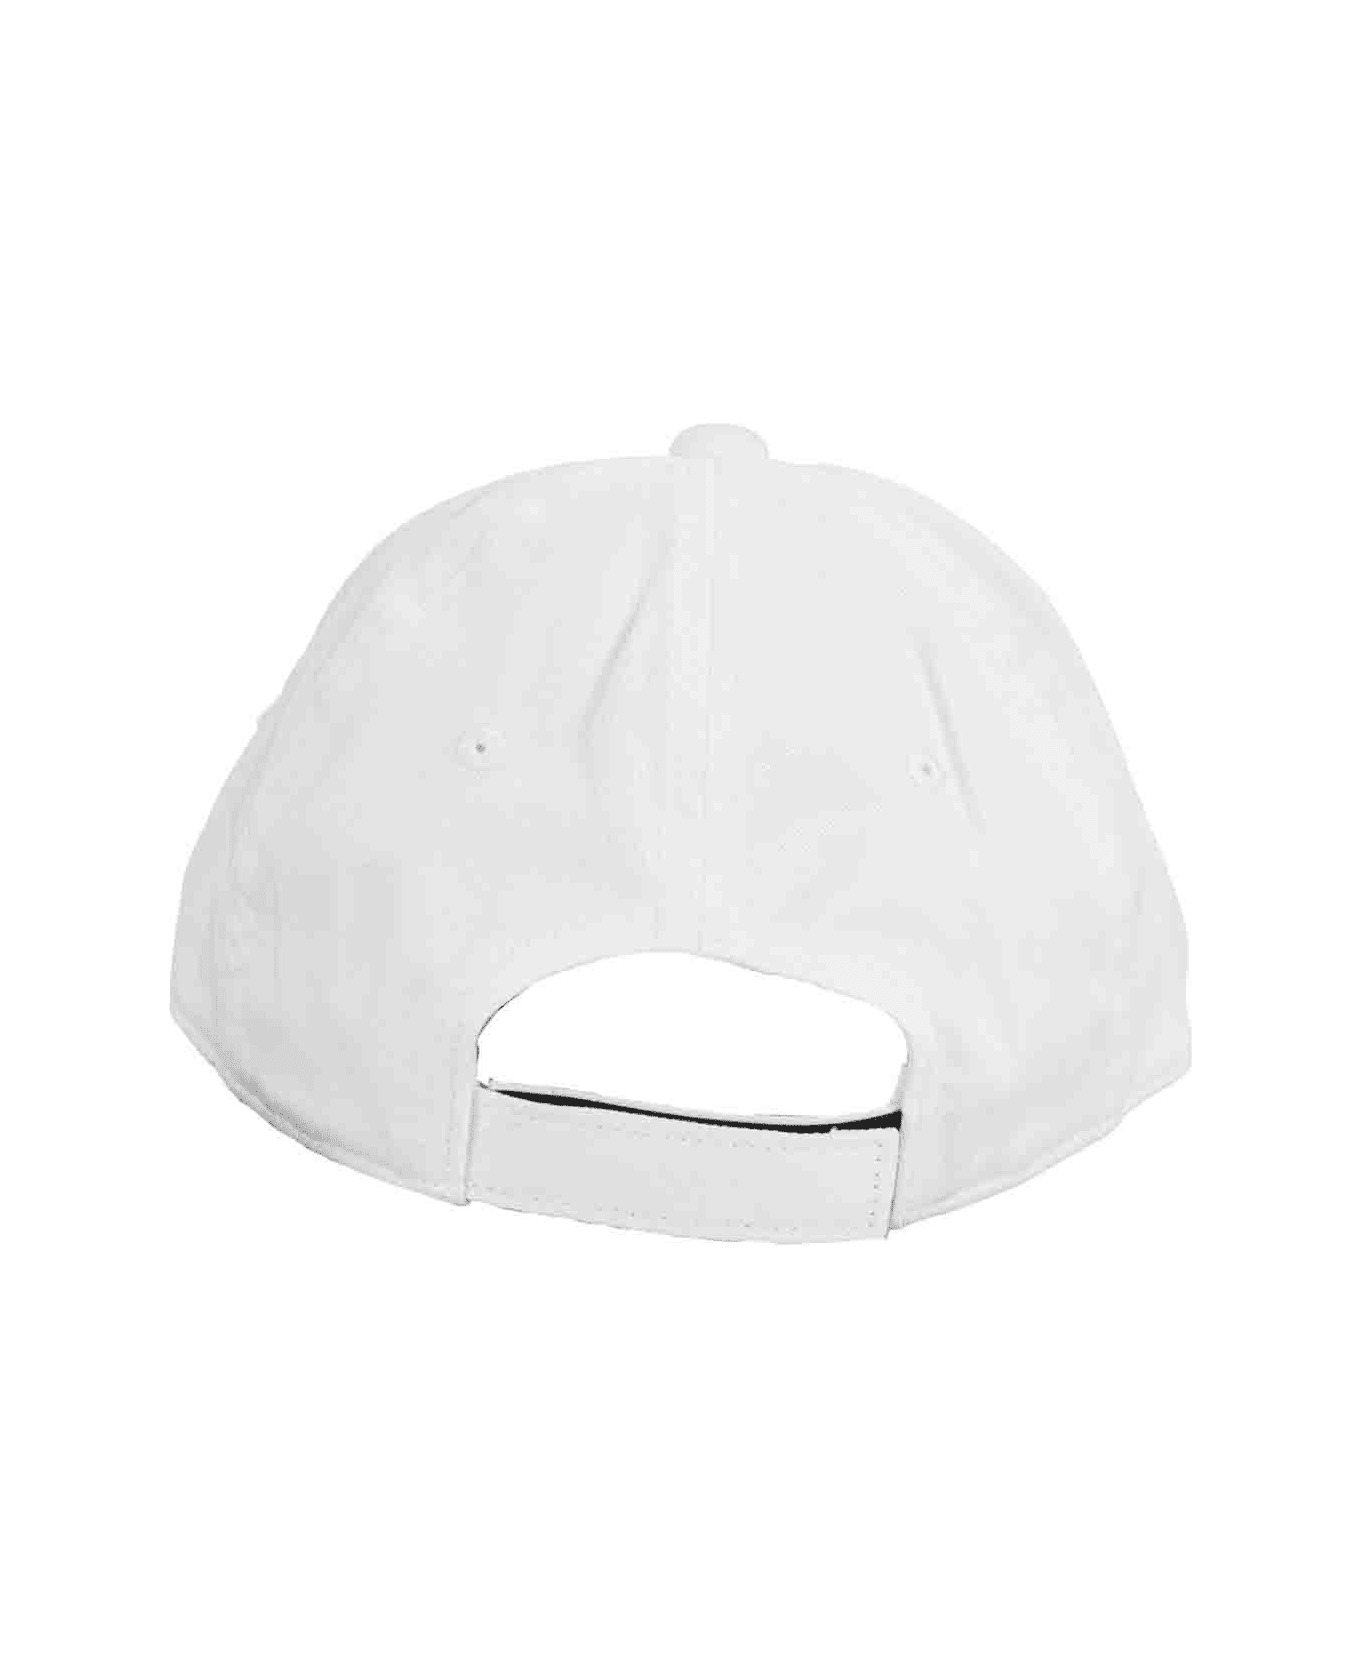 Emporio Armani Hats White - White